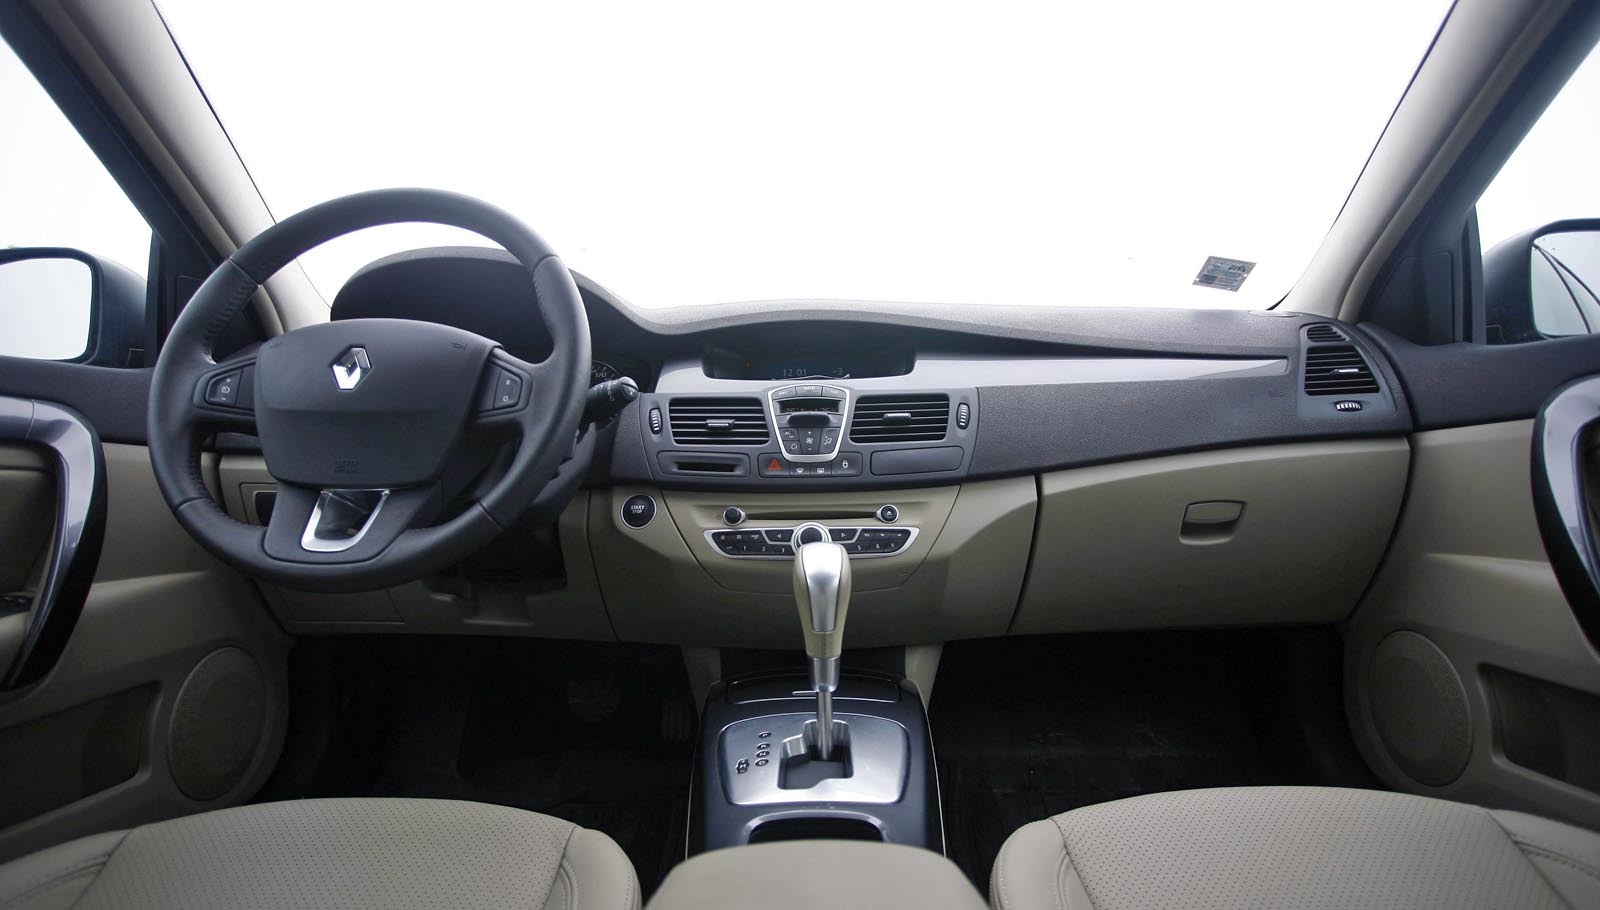 Renault Laguna ofera o ambianta calda si primitoare, numarul comenzilor fiind minimizat